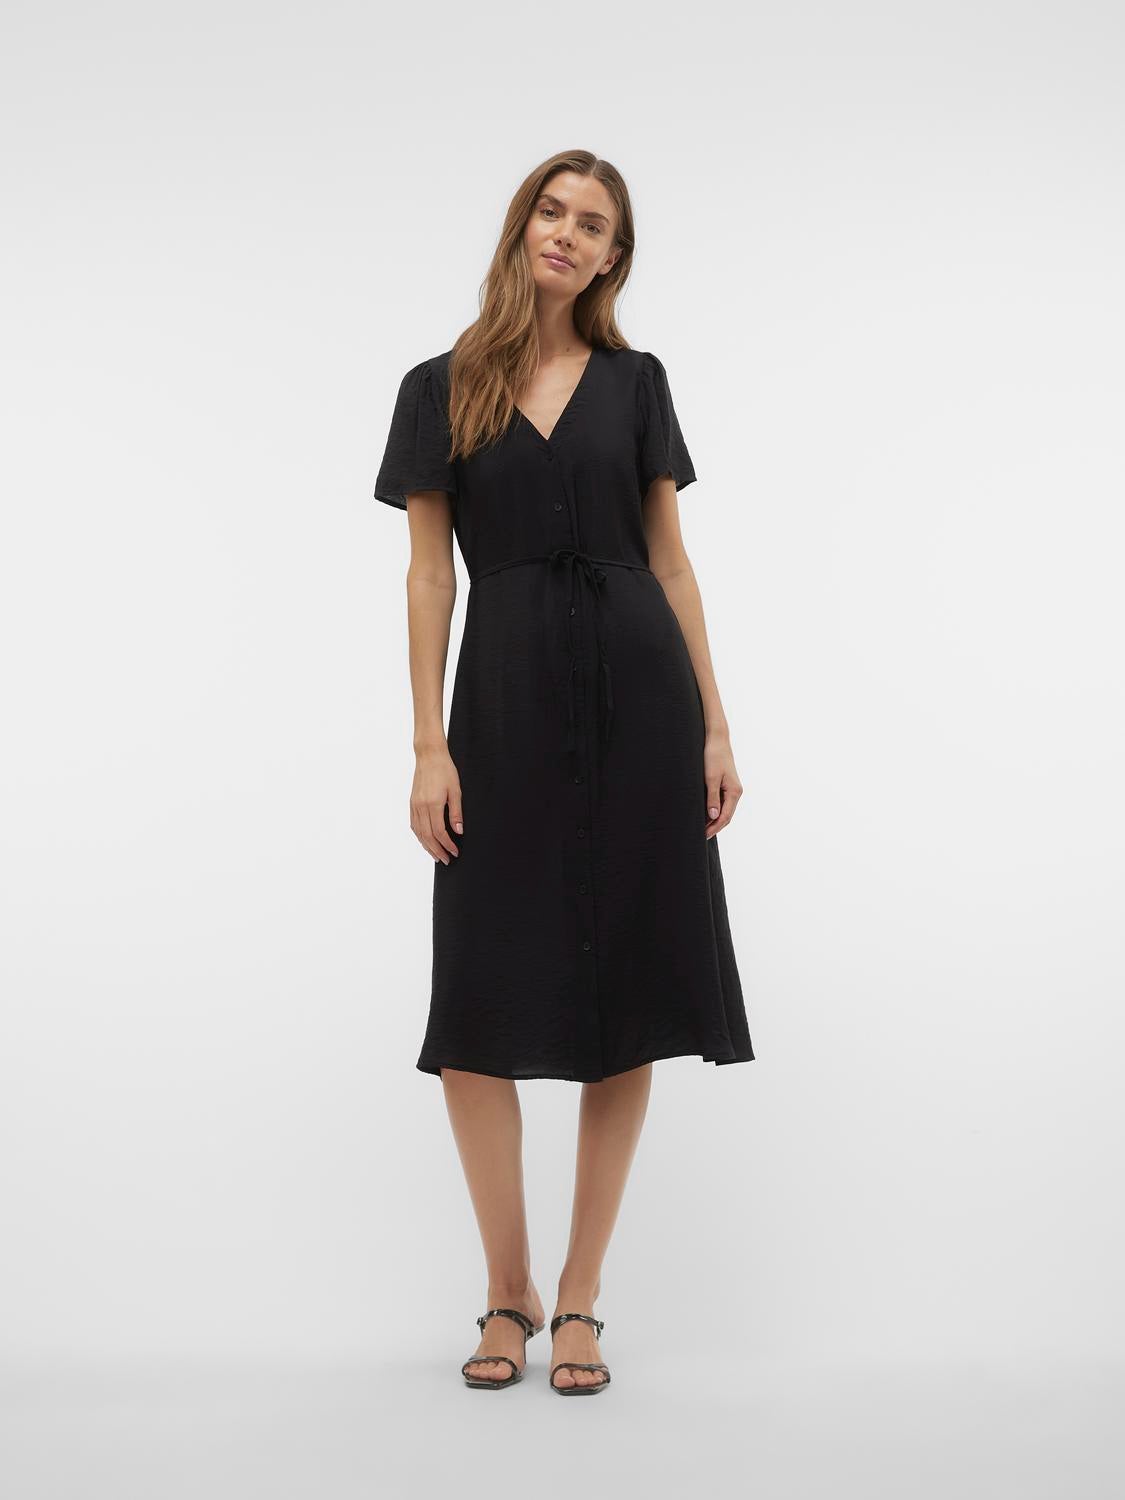 Buy VERO MODA Women Leaf Print Black Dress online